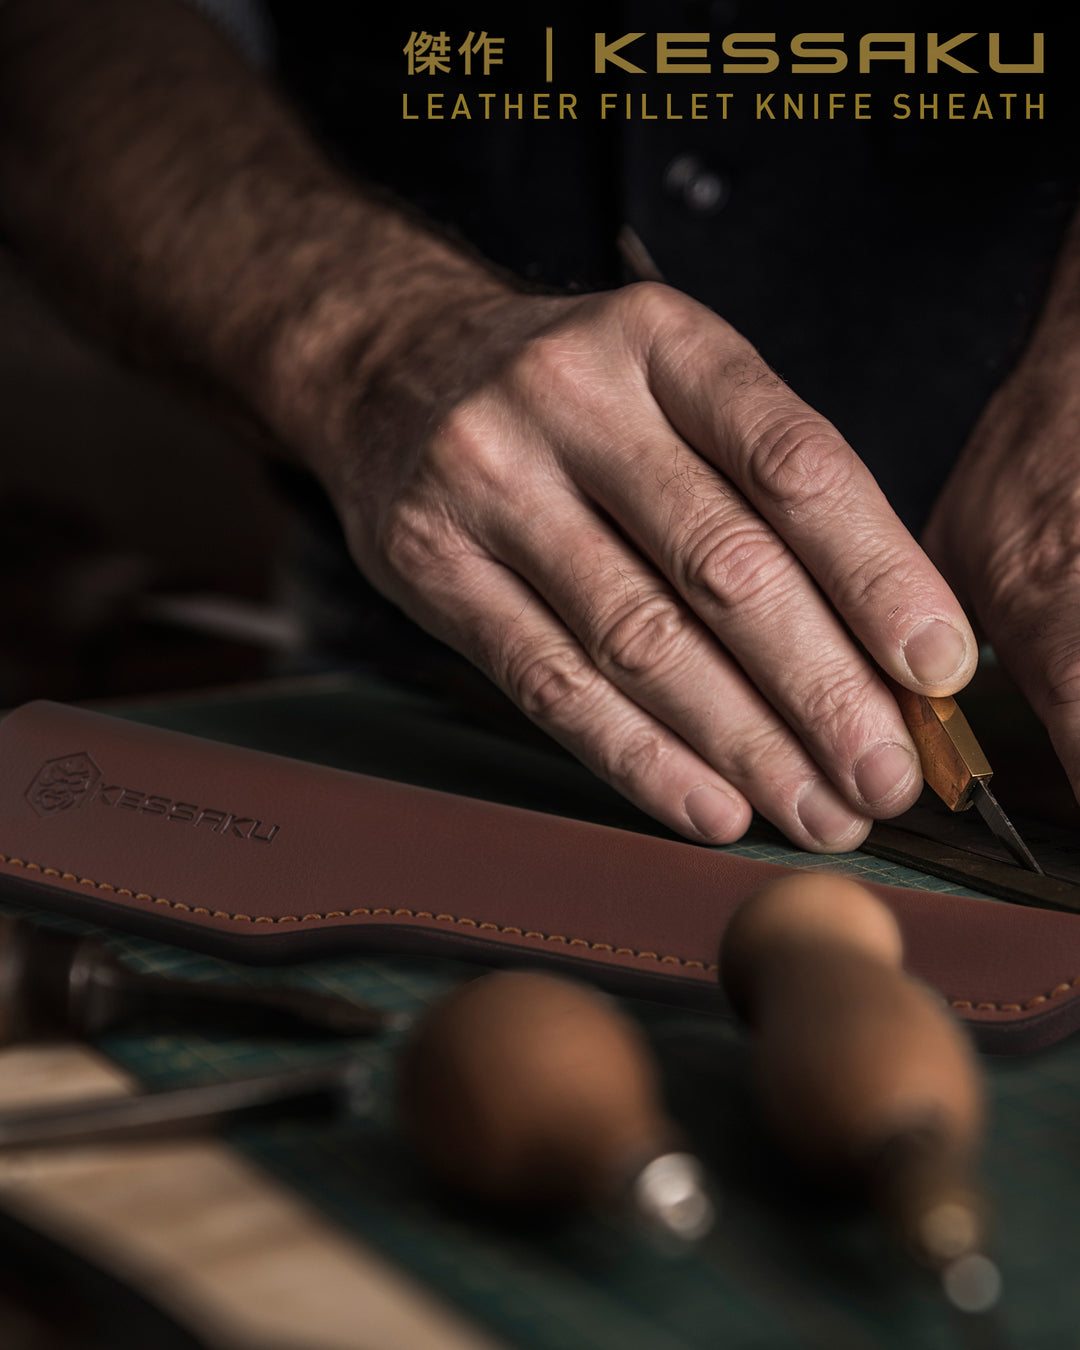 A leather maker crafting the Kessaku Leather Knife Sheath